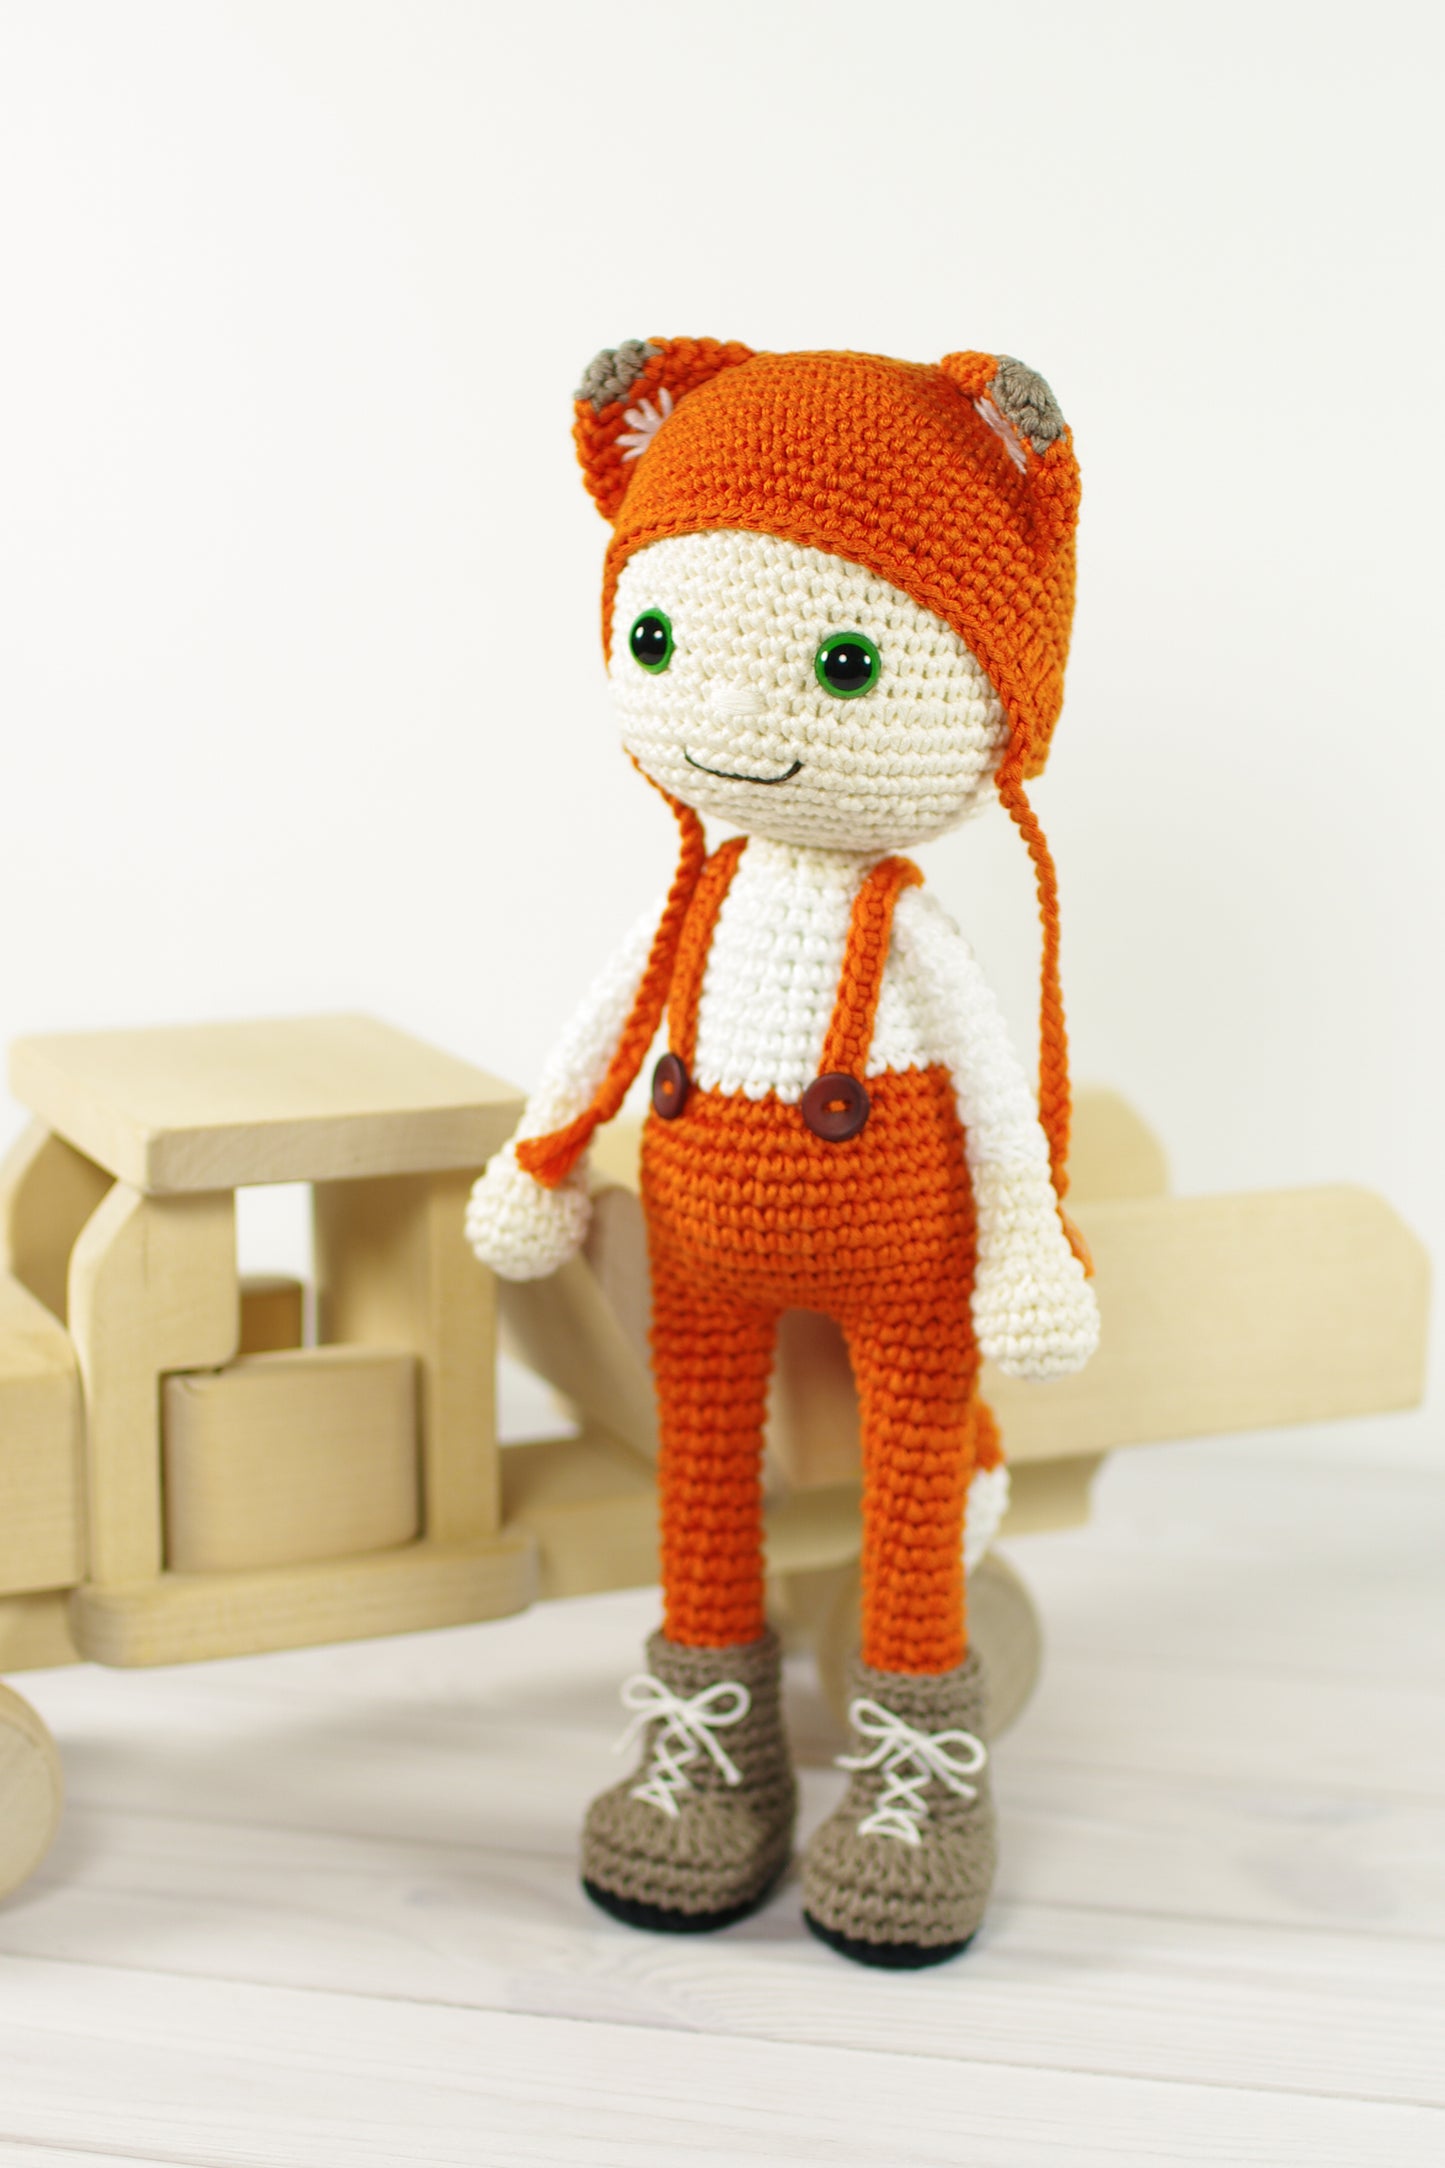 PATTERN: Doll in a Fox Costume